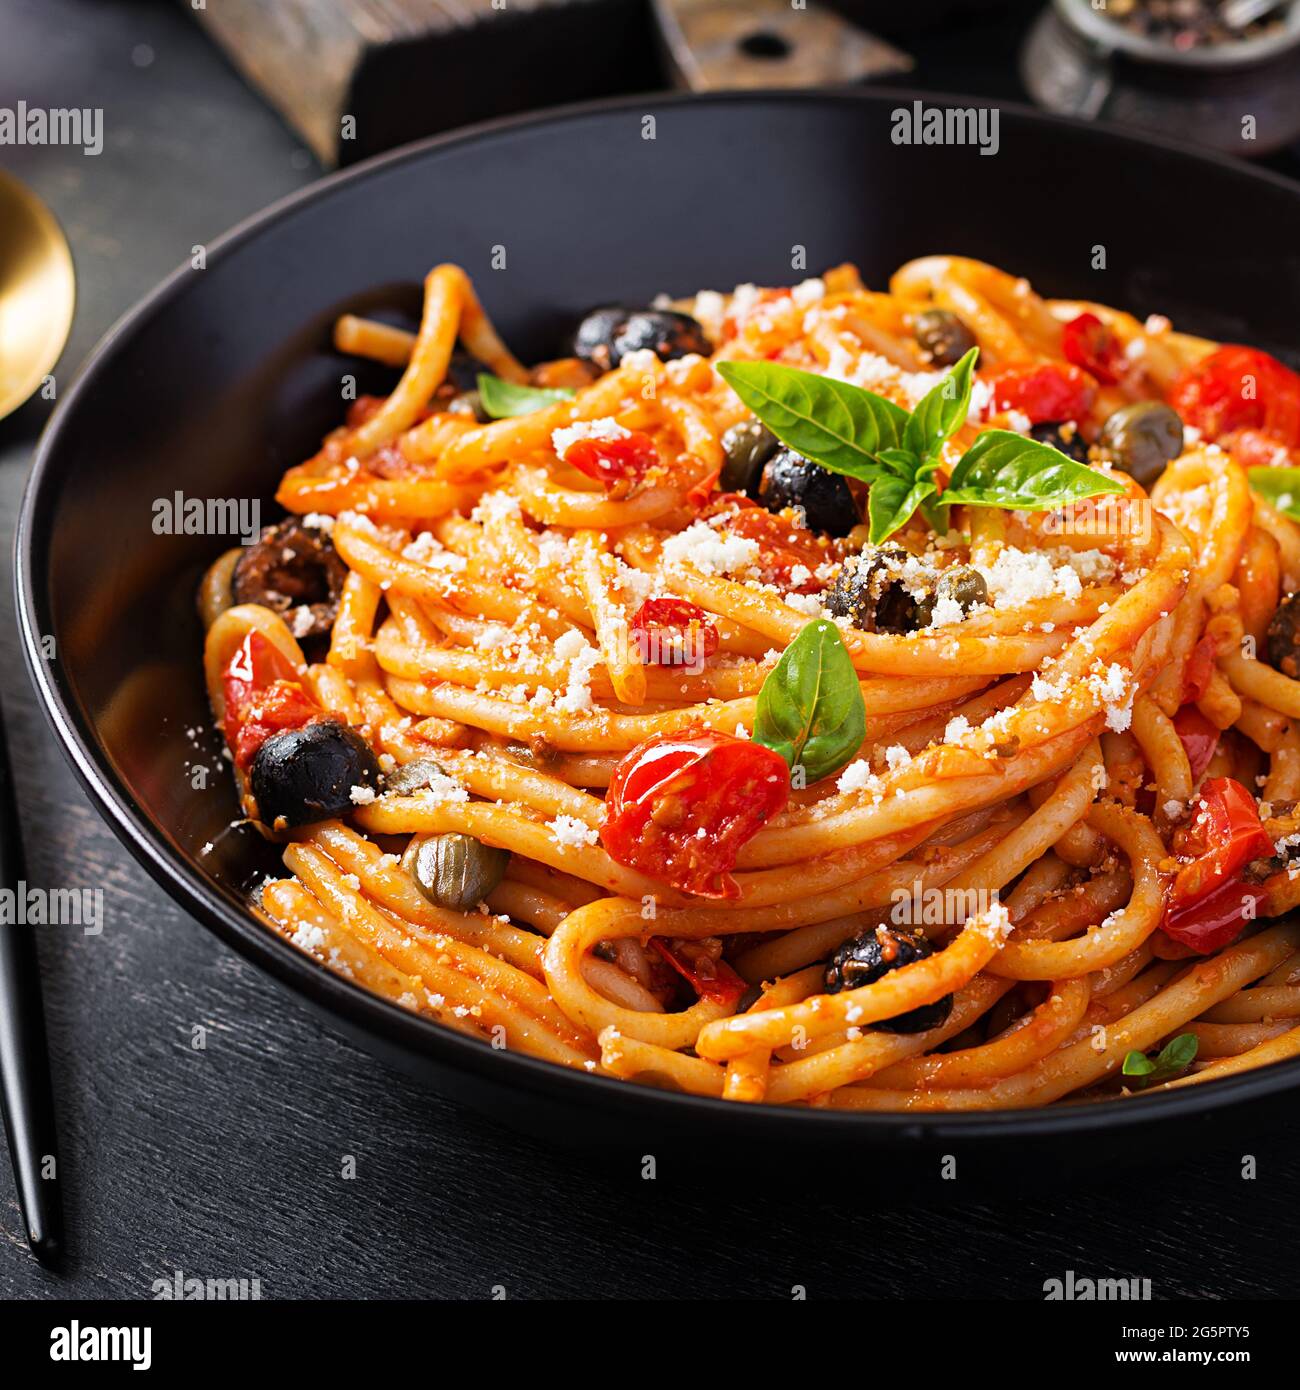 Spaghetti alla puttanesca - italian pasta dish with tomatoes, black olives, capers, anchovies and basil Stock Photo